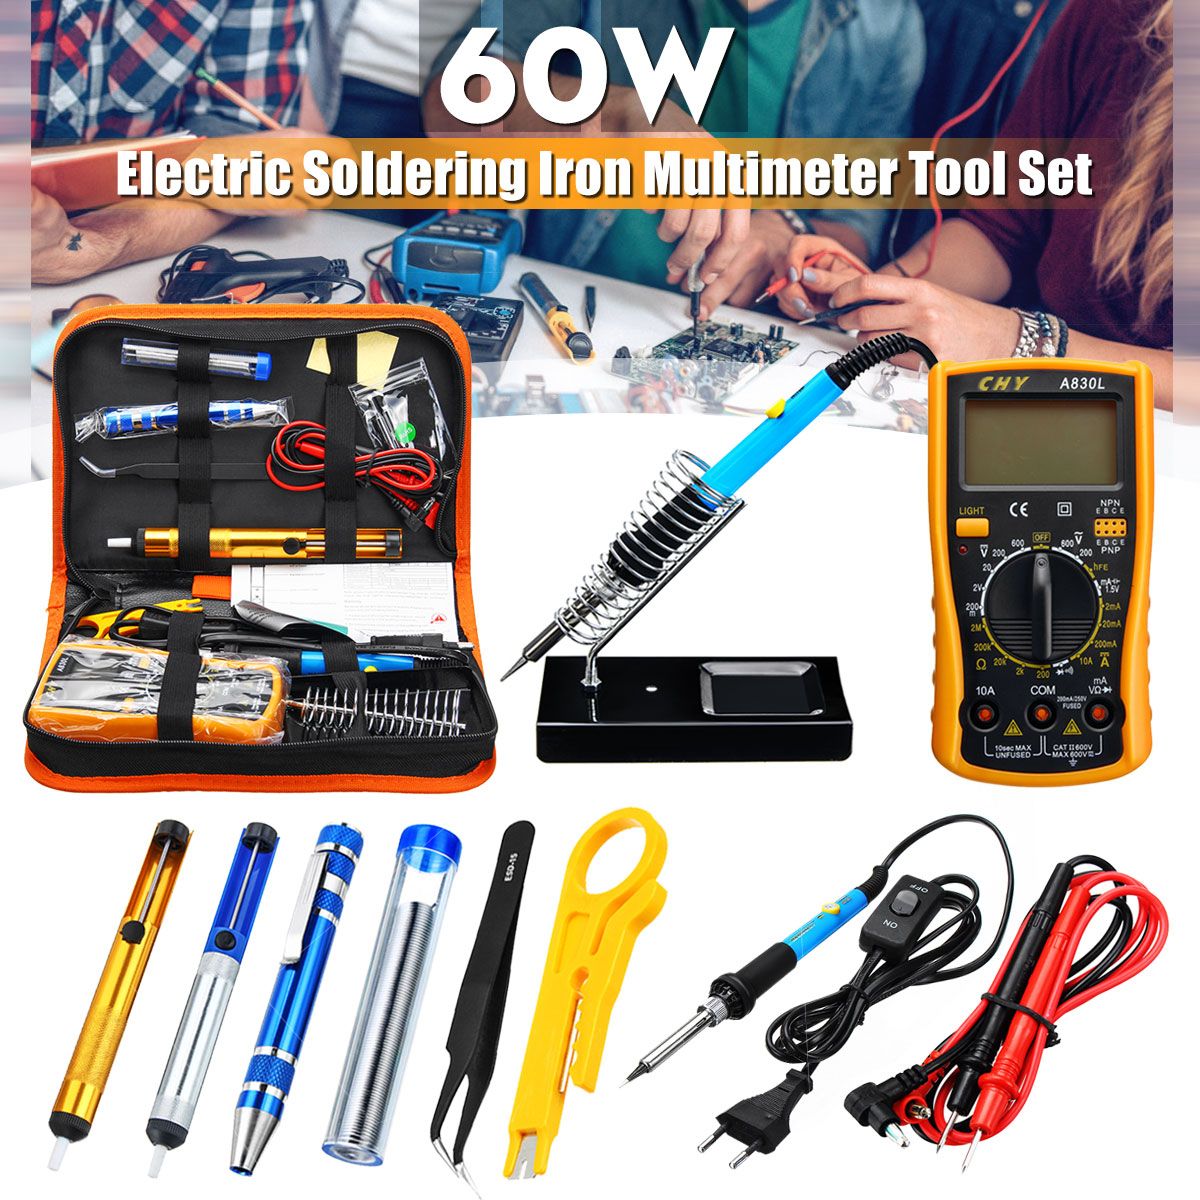 13Pcs-60W-Electric-Solder-Iron-Multimeter-Adjustable-Temperature-Welding-Tool-Set-1456448